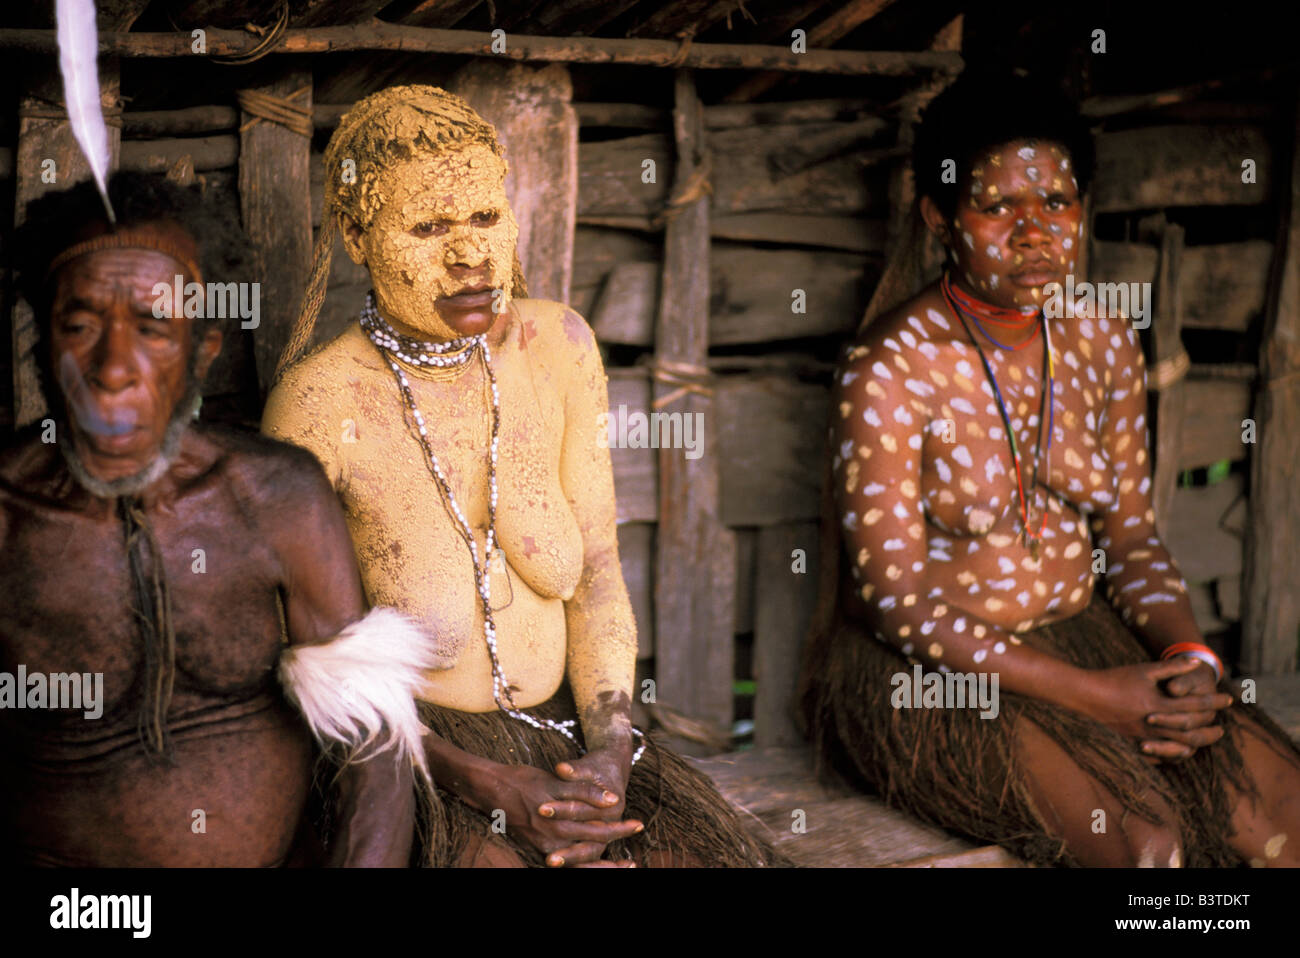 Oceania, Indonesia, Irian Jaya. The Dani people. Stock Photo